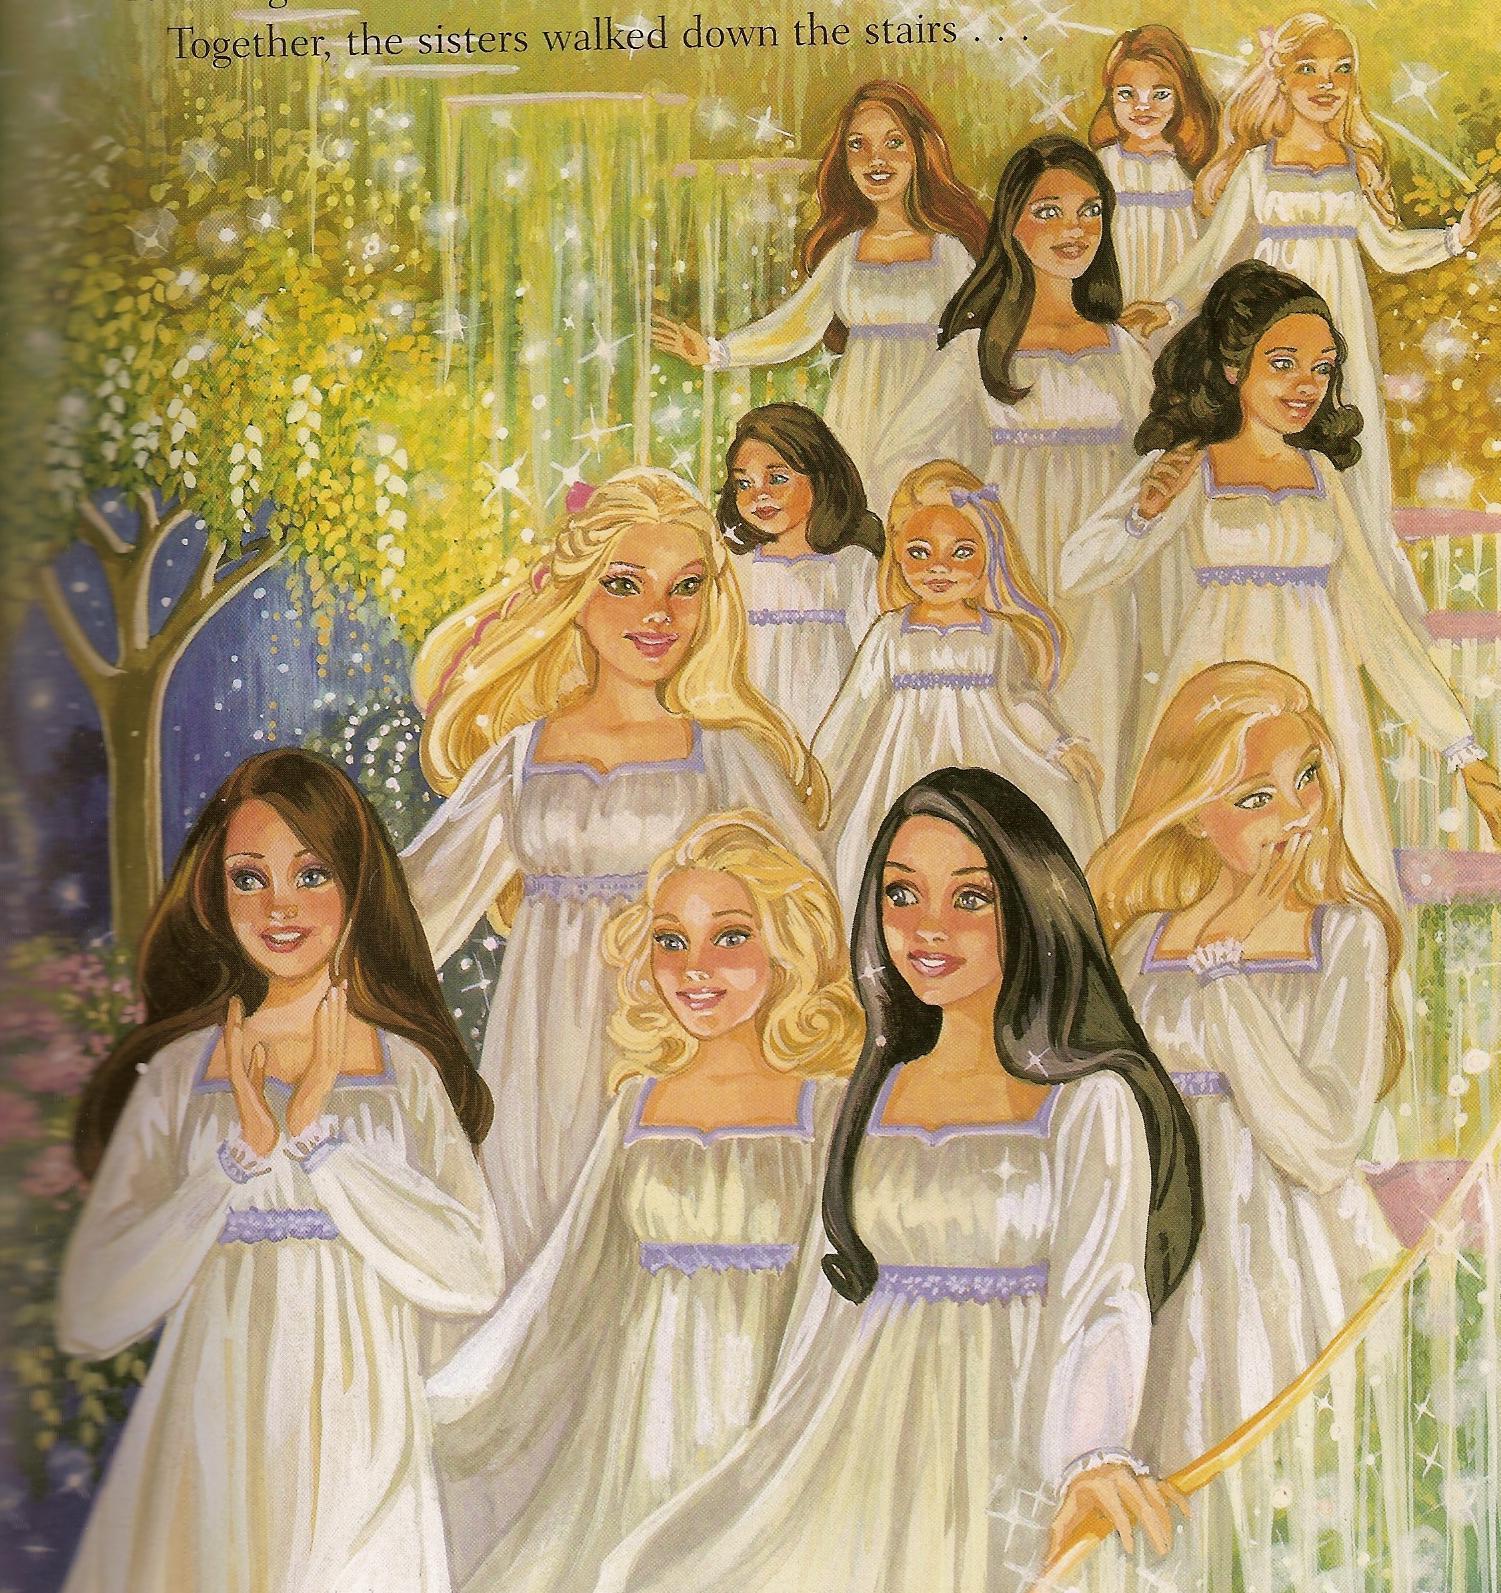 12 Dancing Princesses barbie in the 12 dancing princesses 1501 1593 Walking down the stairs